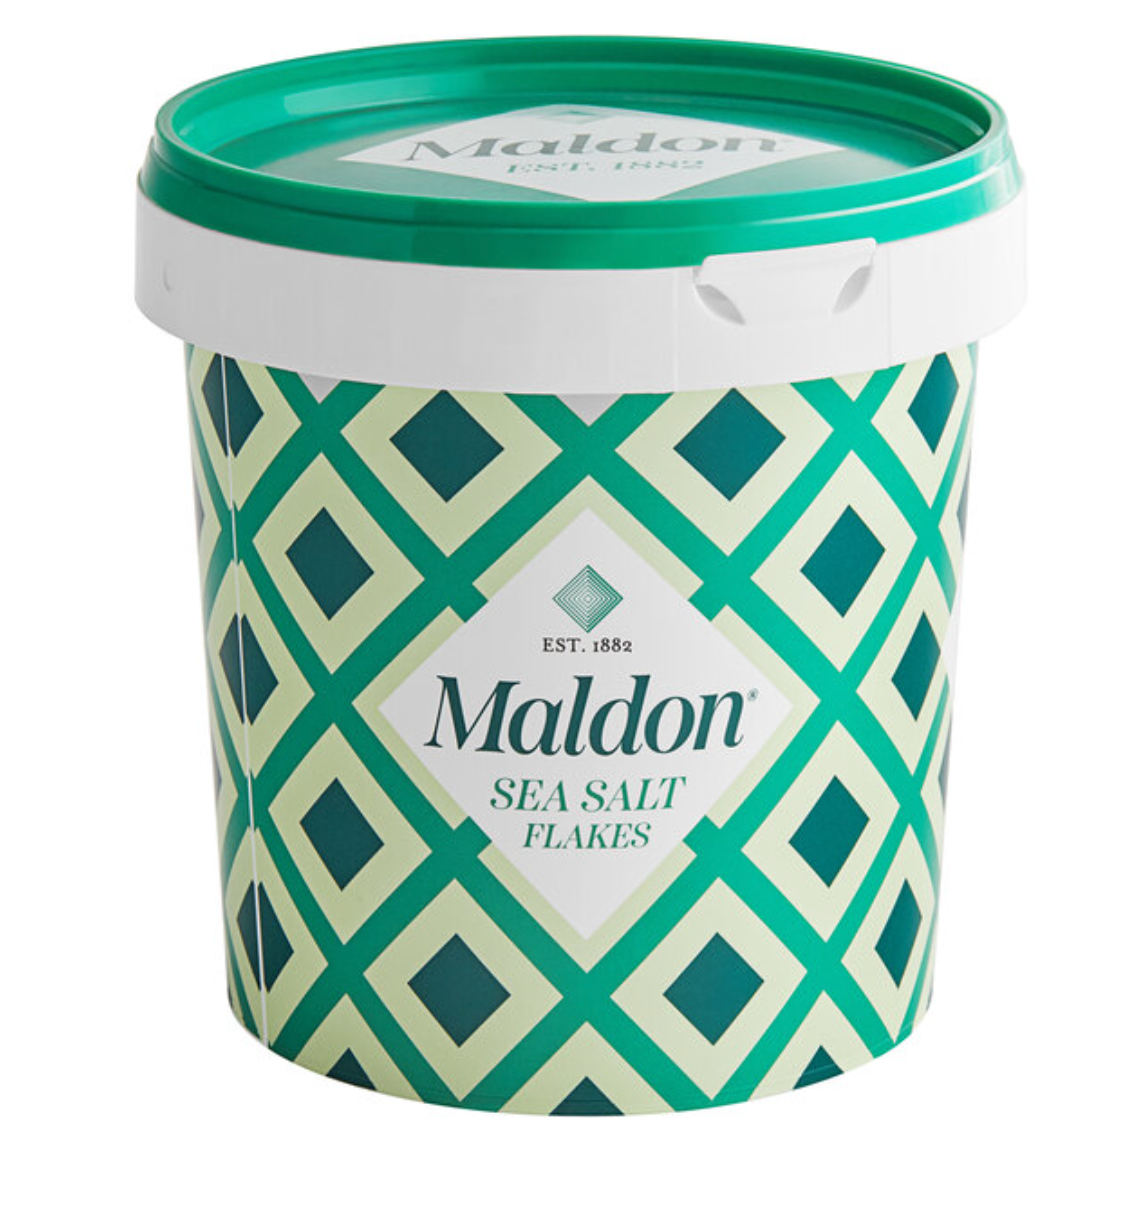 Maldon Sea Salt Flakes 1.25lb Bucket